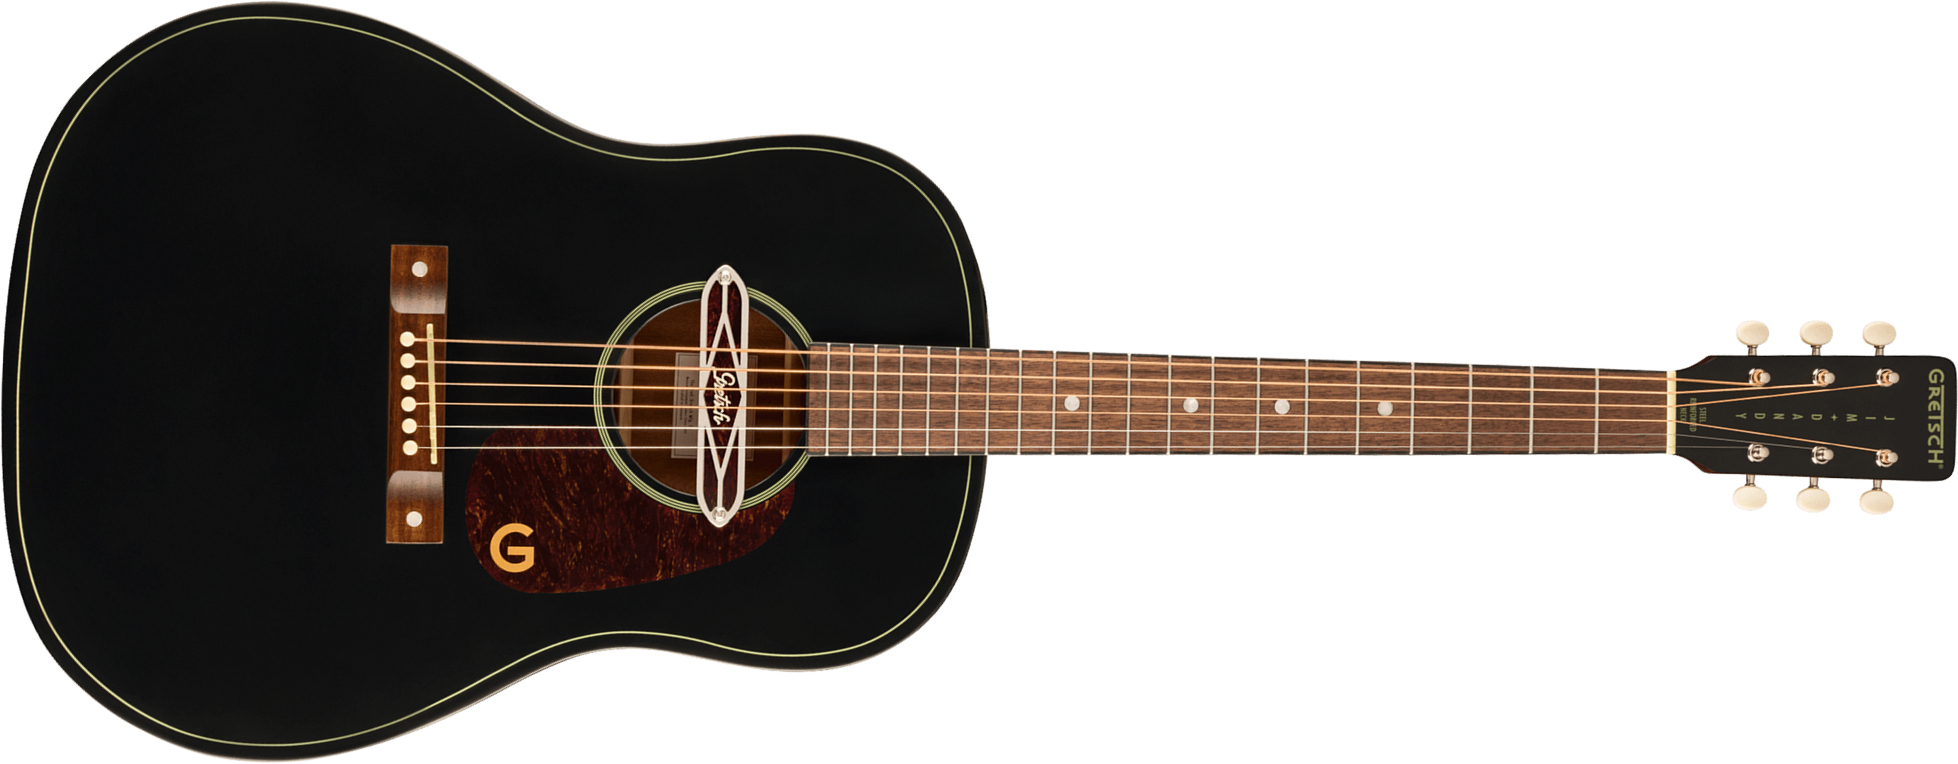 Gretsch Jim Dandy Deltoluxe Dreadnought Tout Sapele Noy - Black Top Semi Gloss - Elektroakustische Gitarre - Main picture